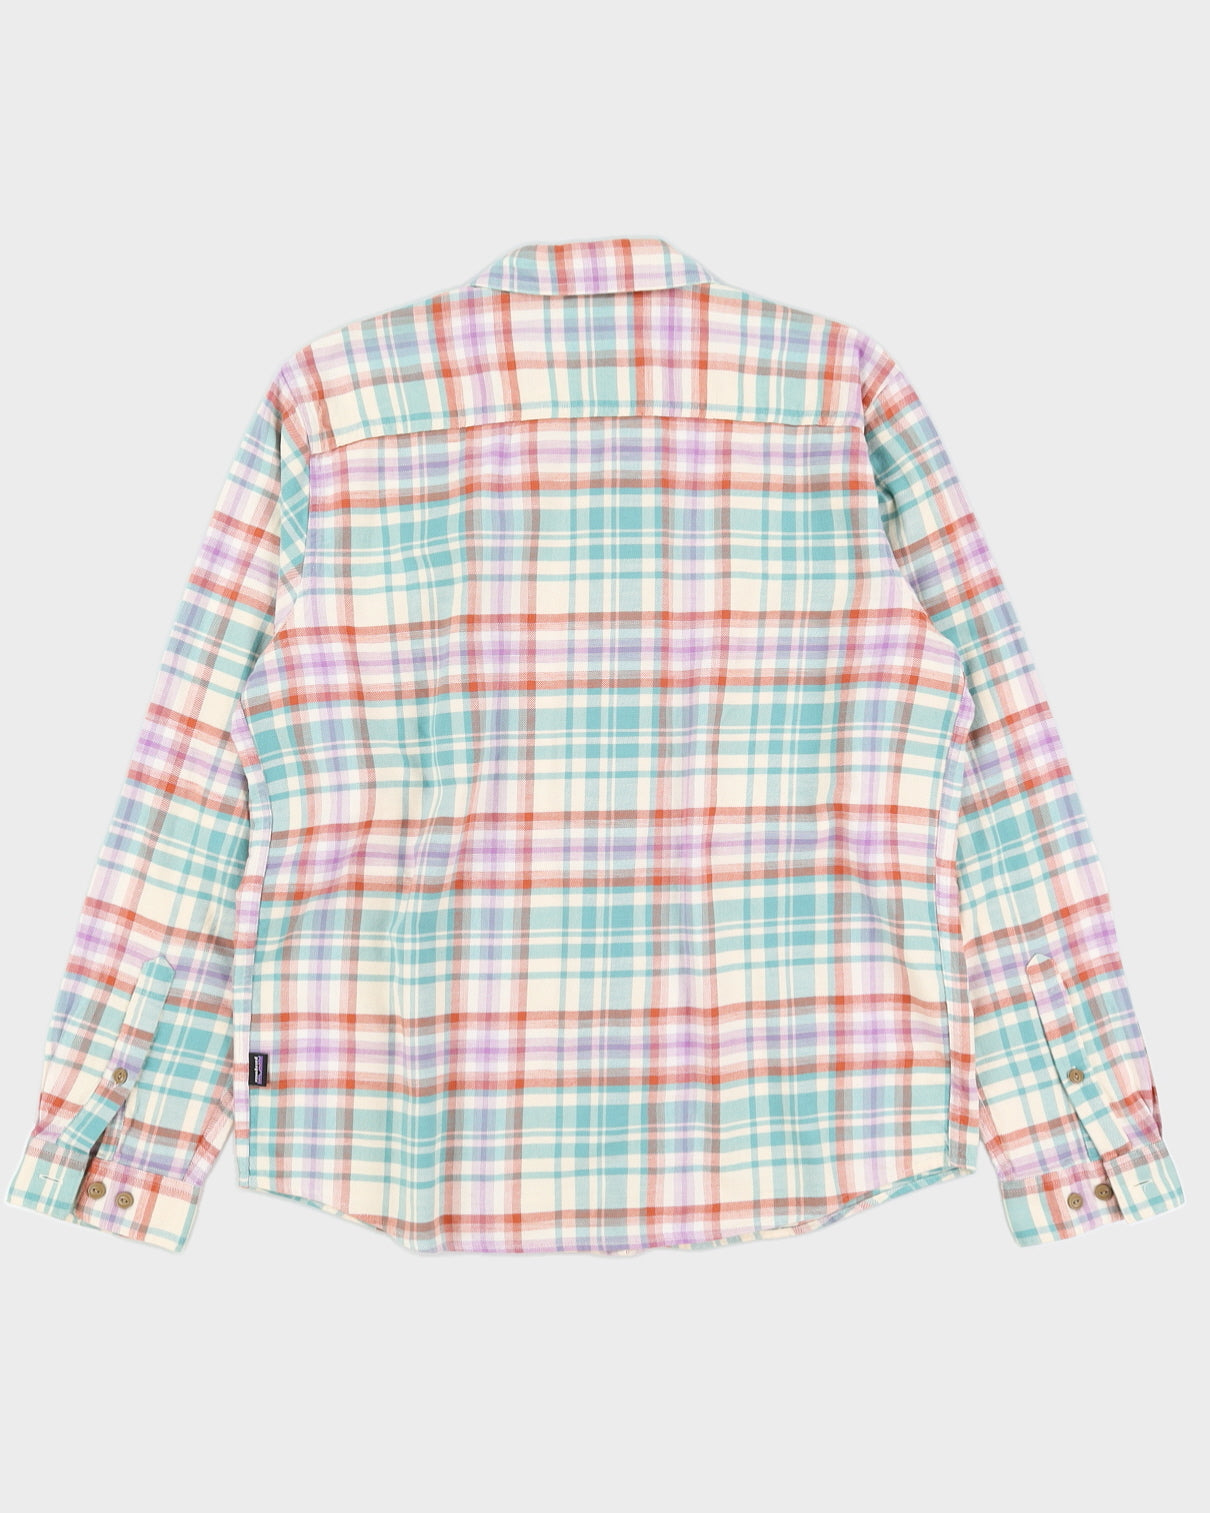 Patagonia Men's Checkered Shirt - L